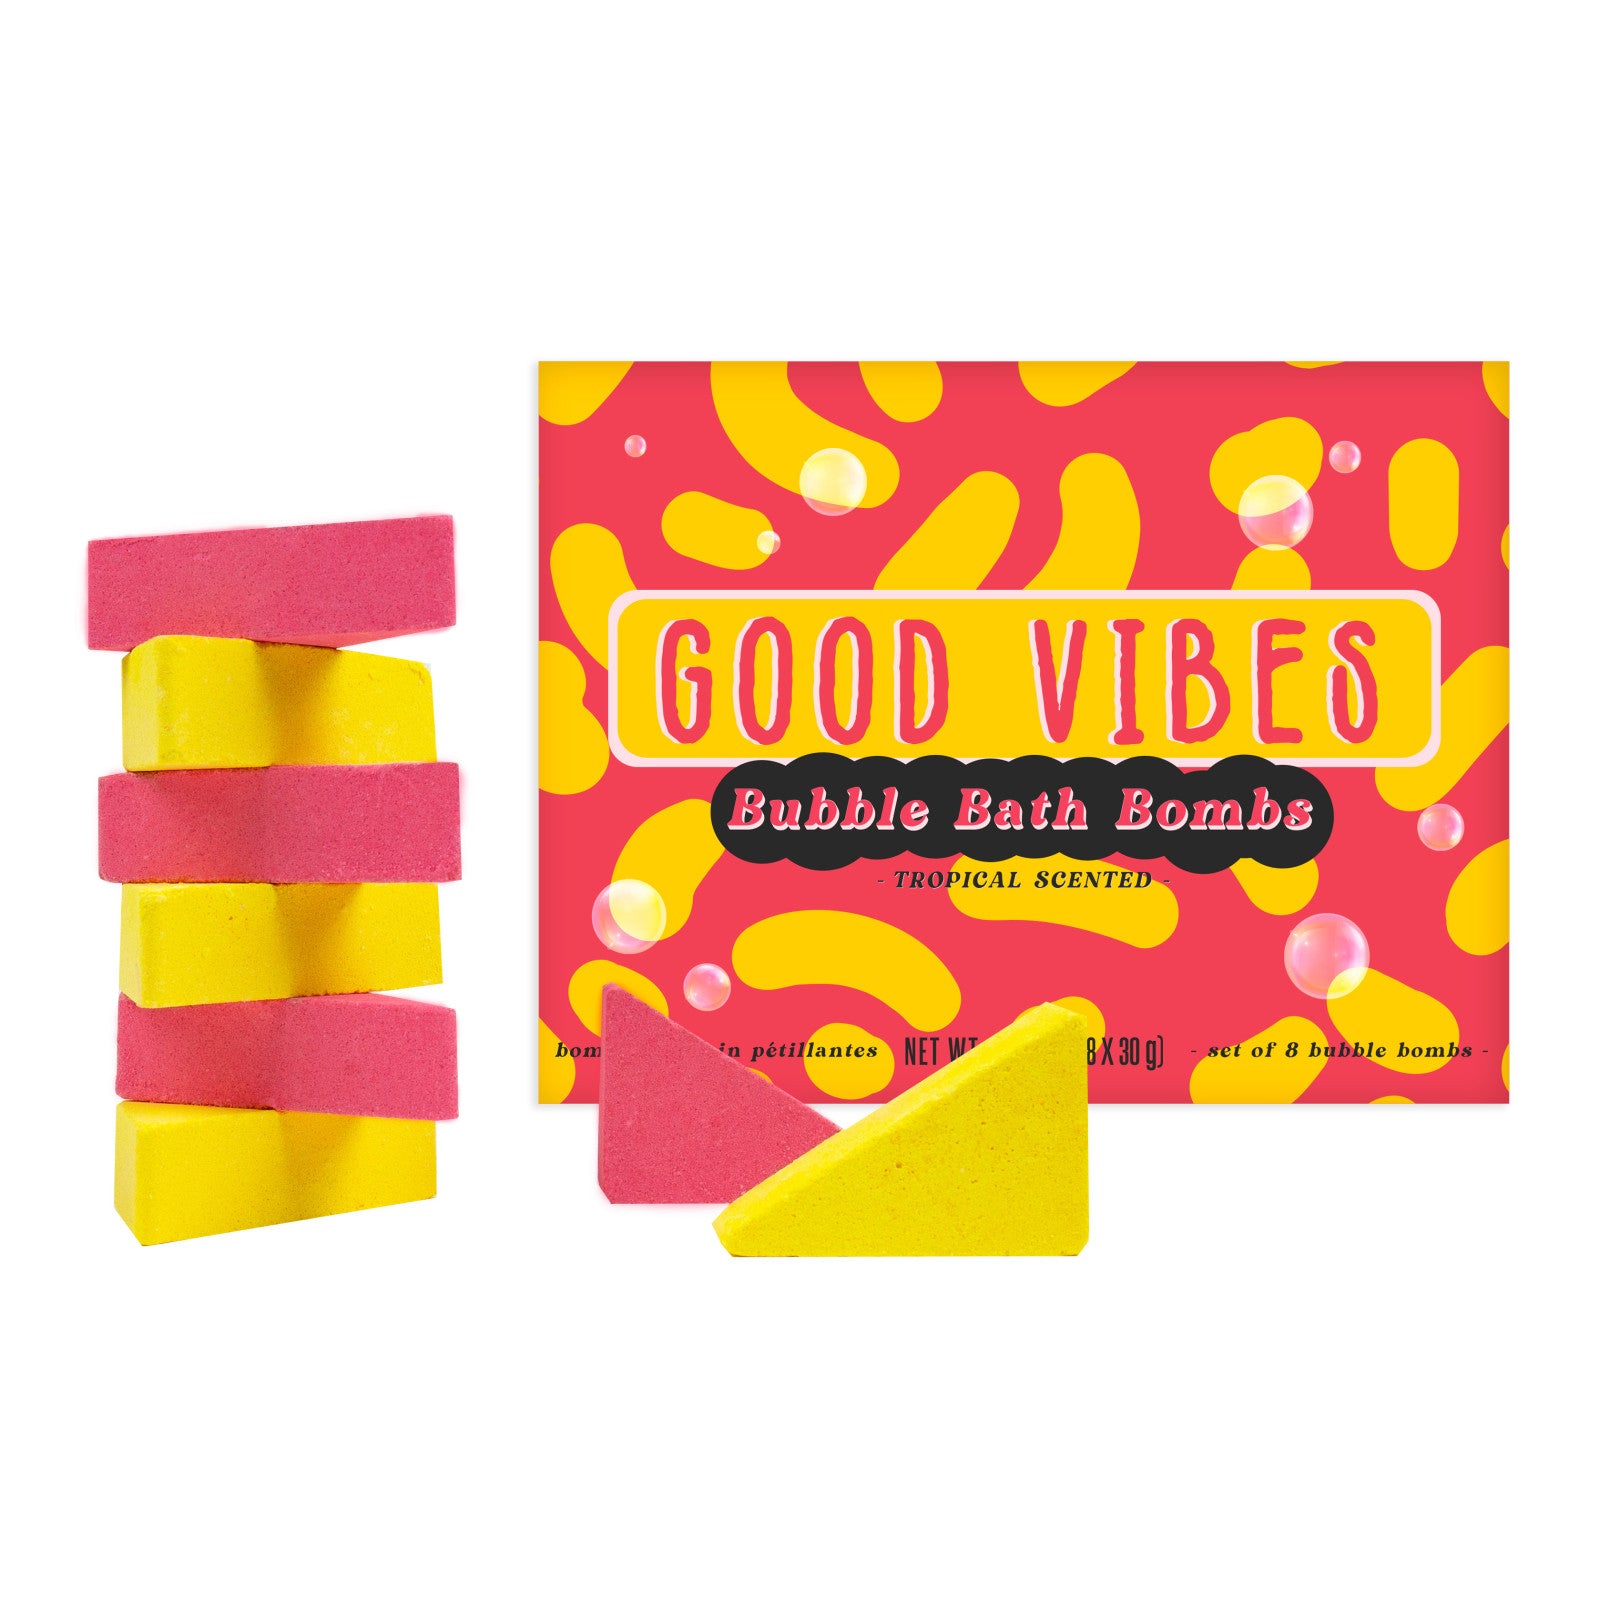 Good Vibes Bubble Bath Bombs (set of 8)